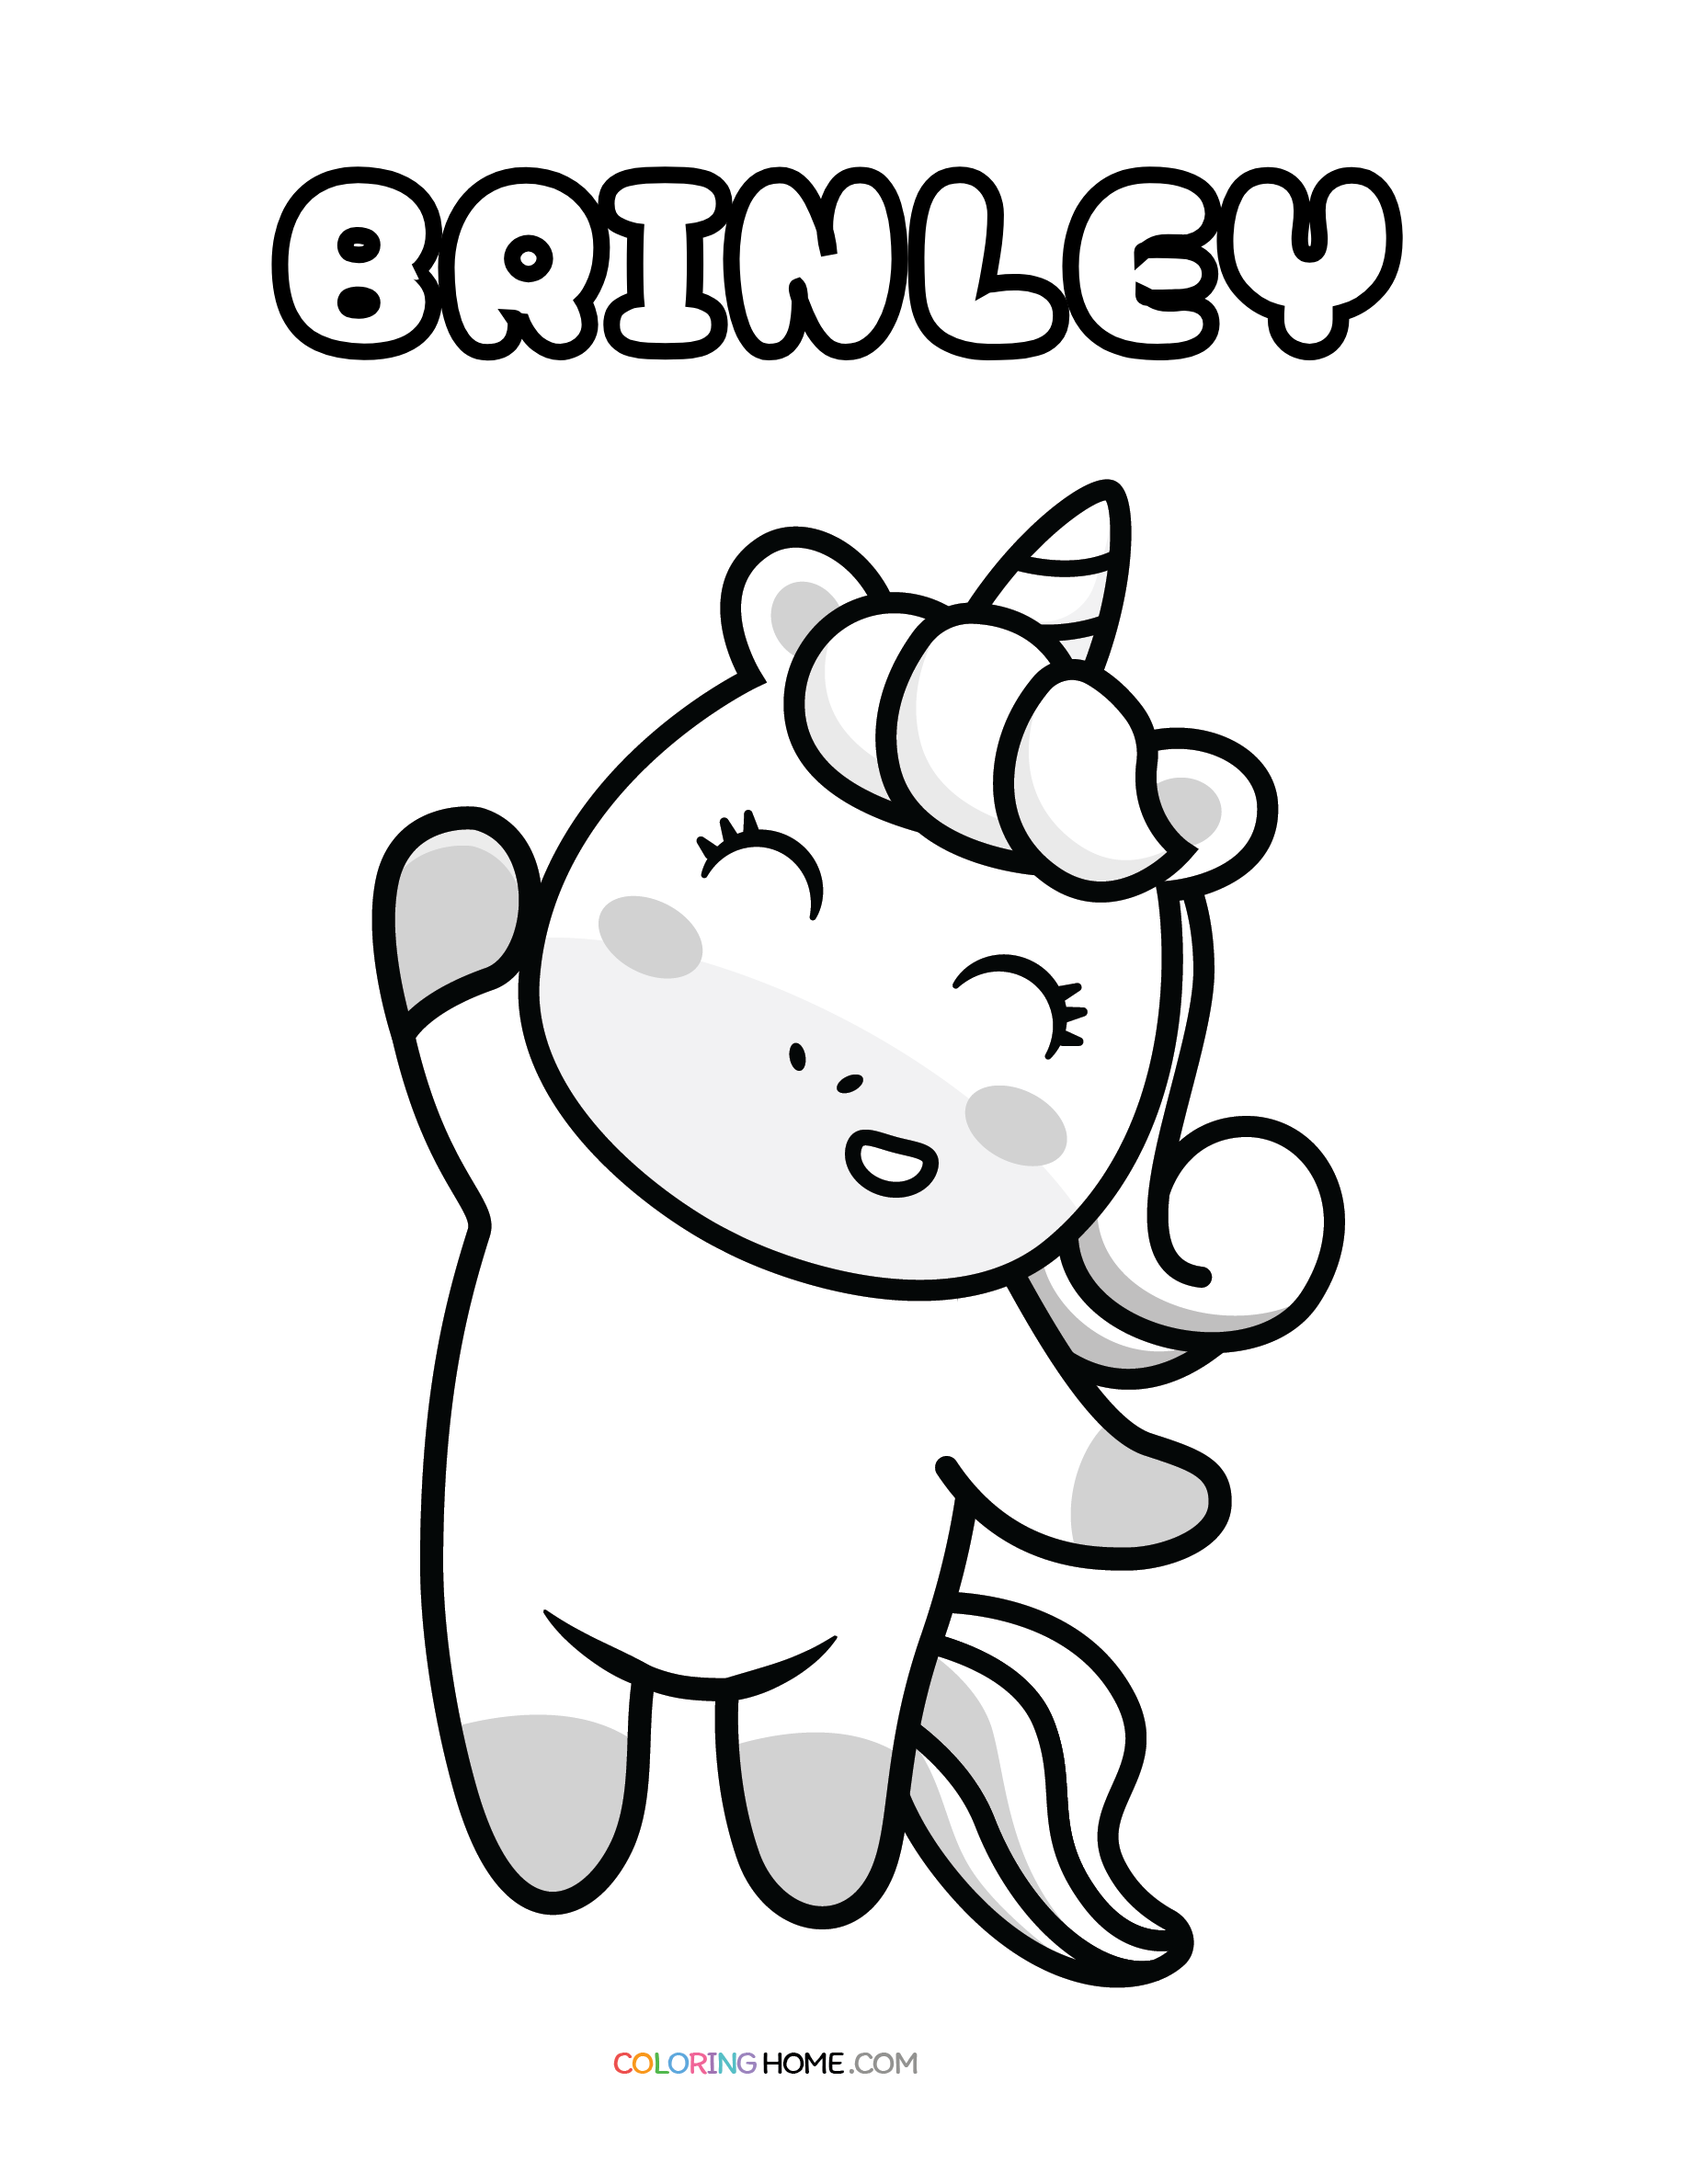 Brinley unicorn coloring page